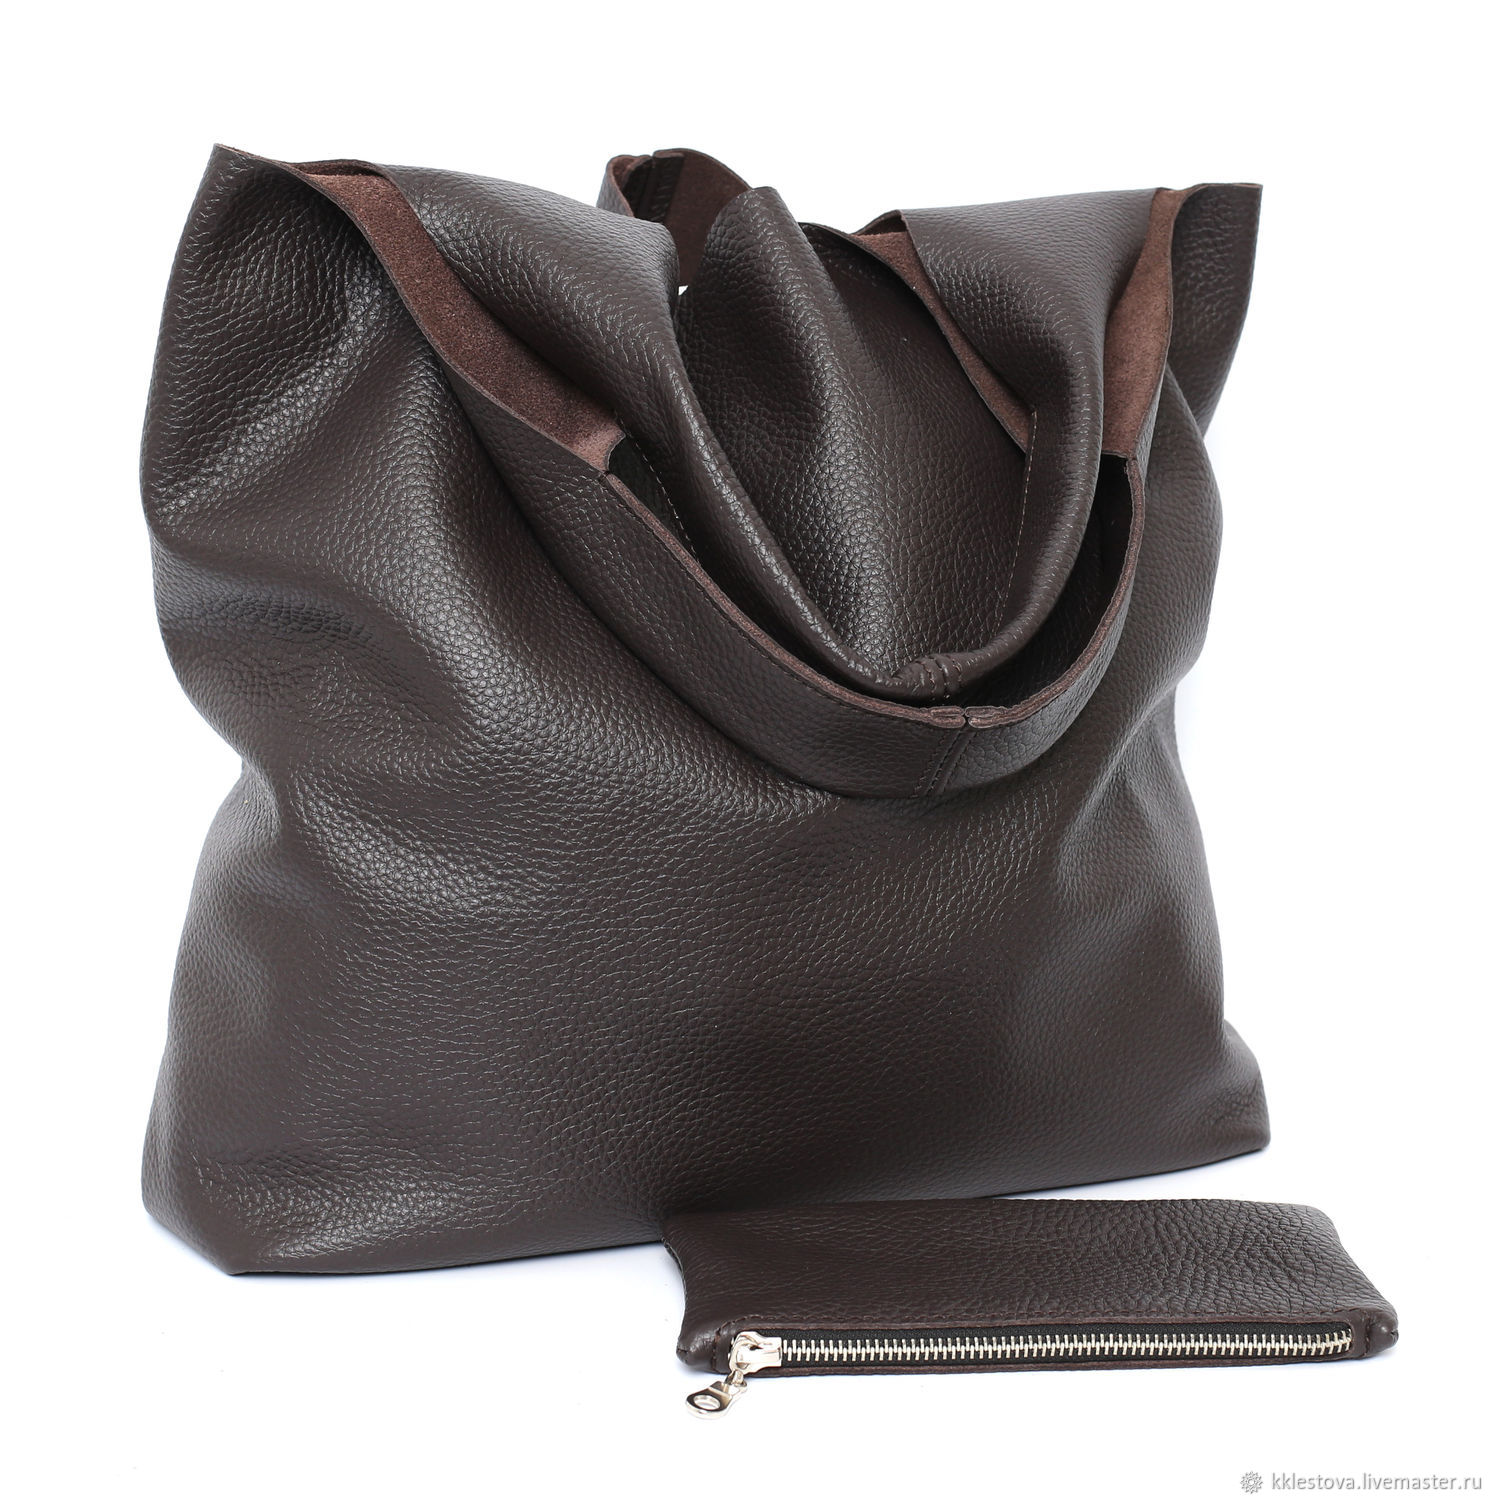 Brown leather Bag Bag medium Package string Bag shopper t shirt, Sacks, Moscow,  Фото №1